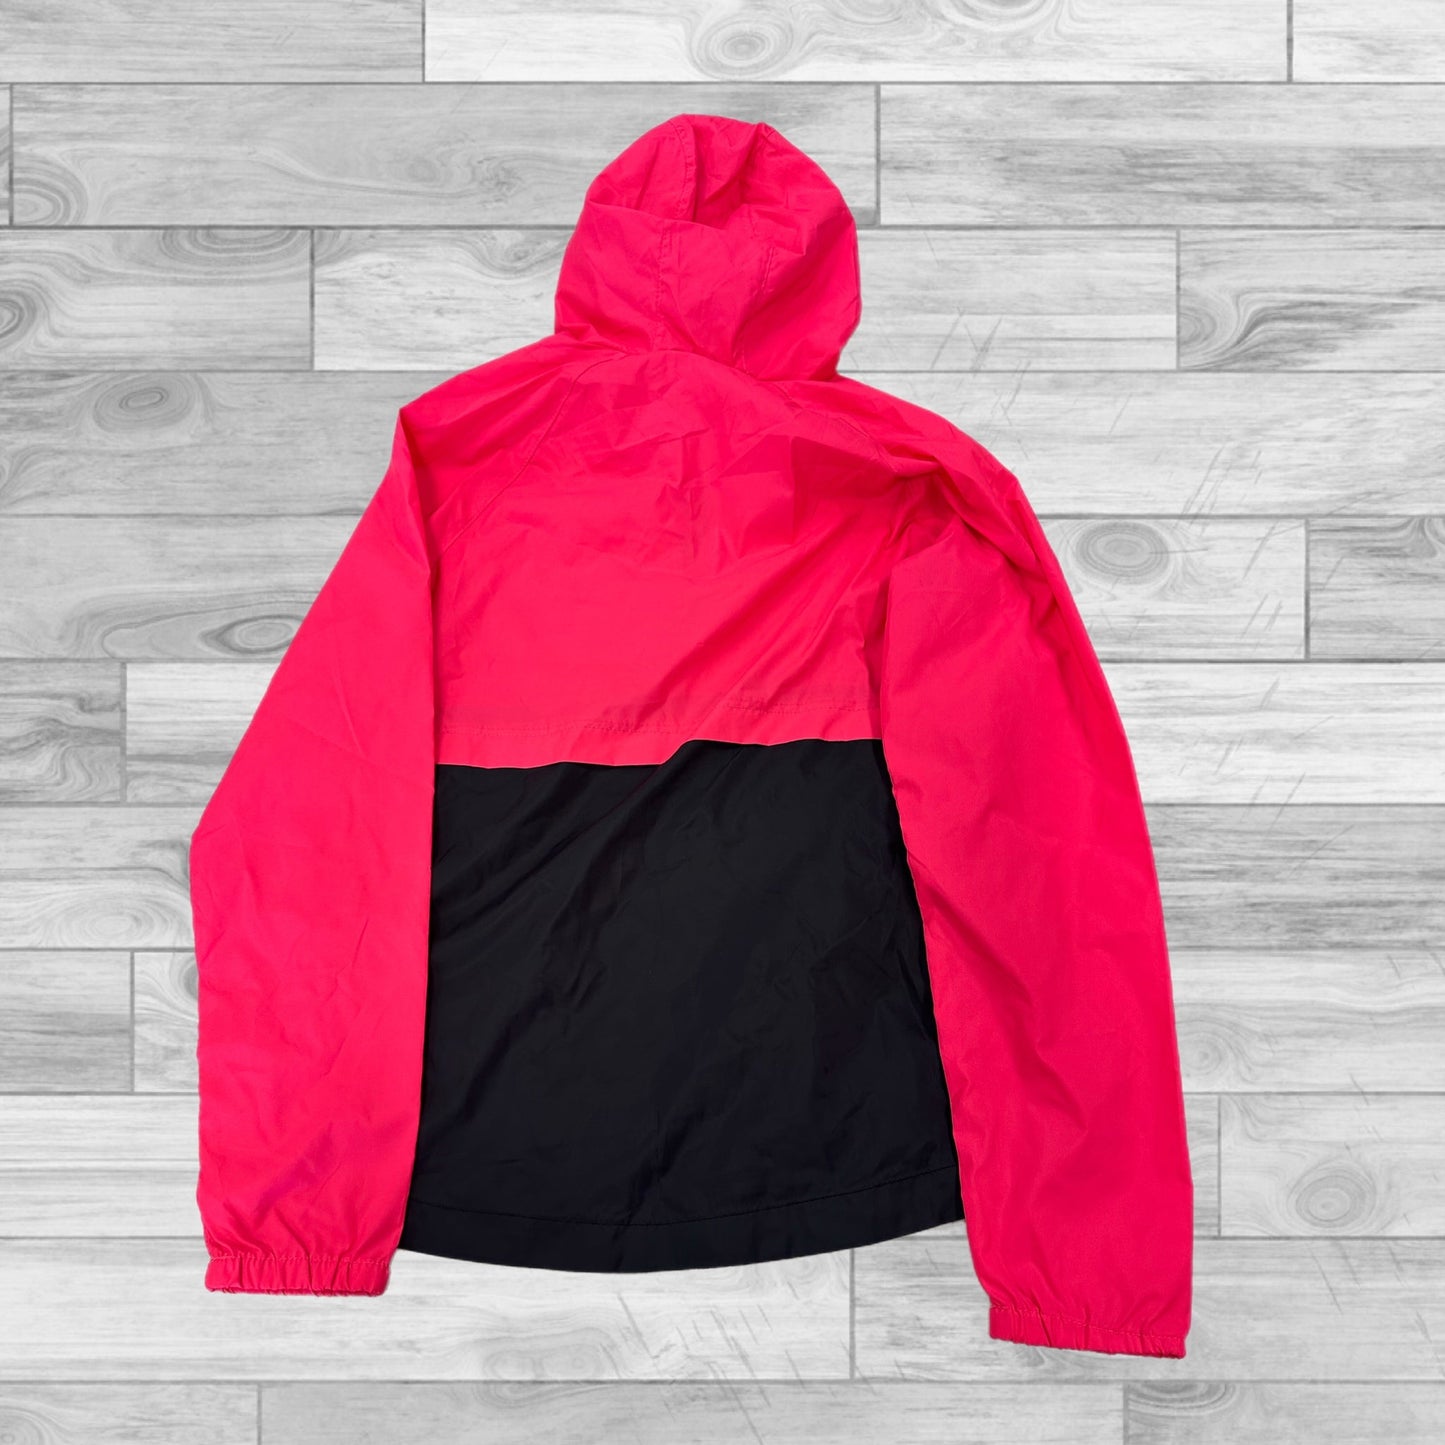 Black & Pink Jacket Windbreaker New Balance, Size M